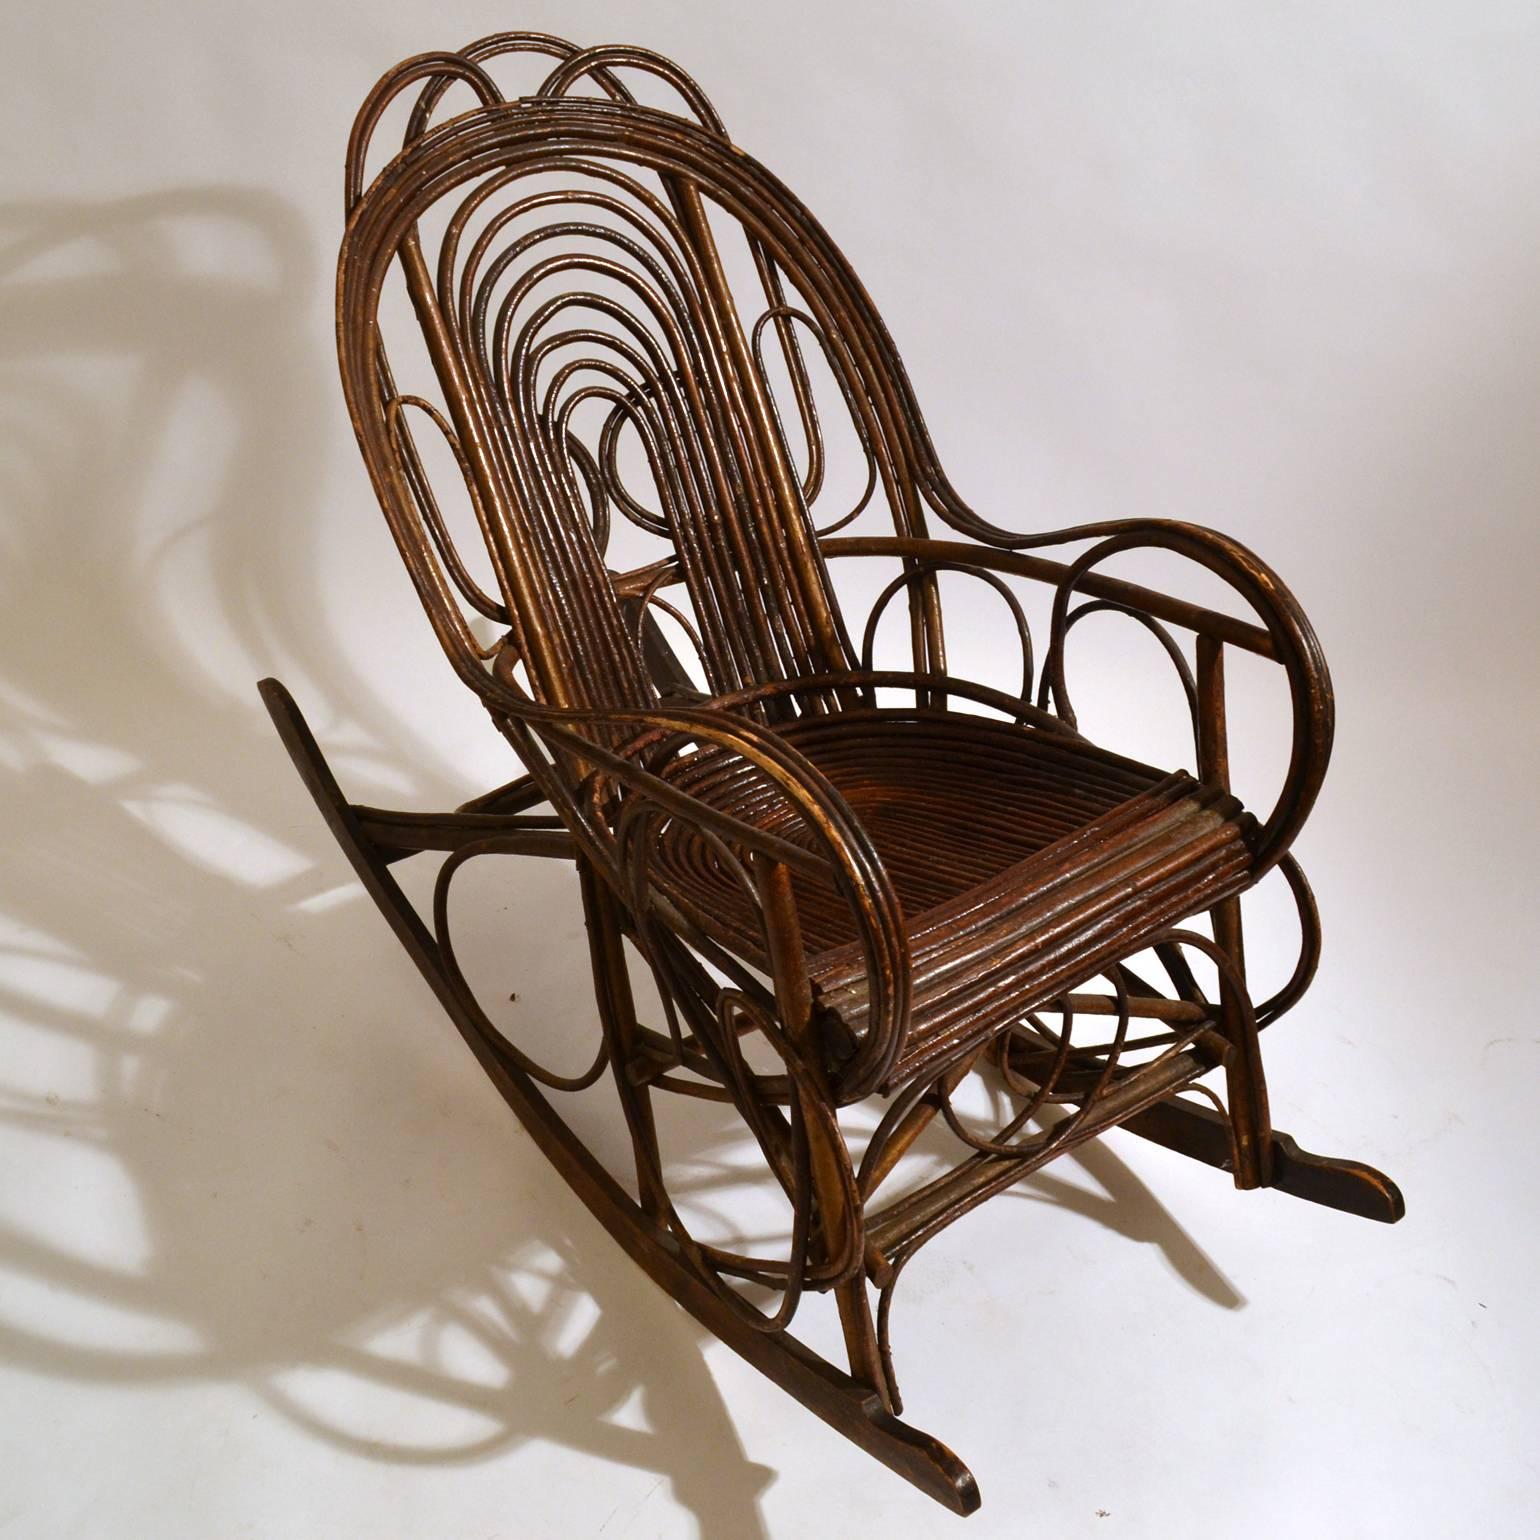 Scandinavian Modern Rocking Chair in Bentwood Willow, Swedish, 1900-1920